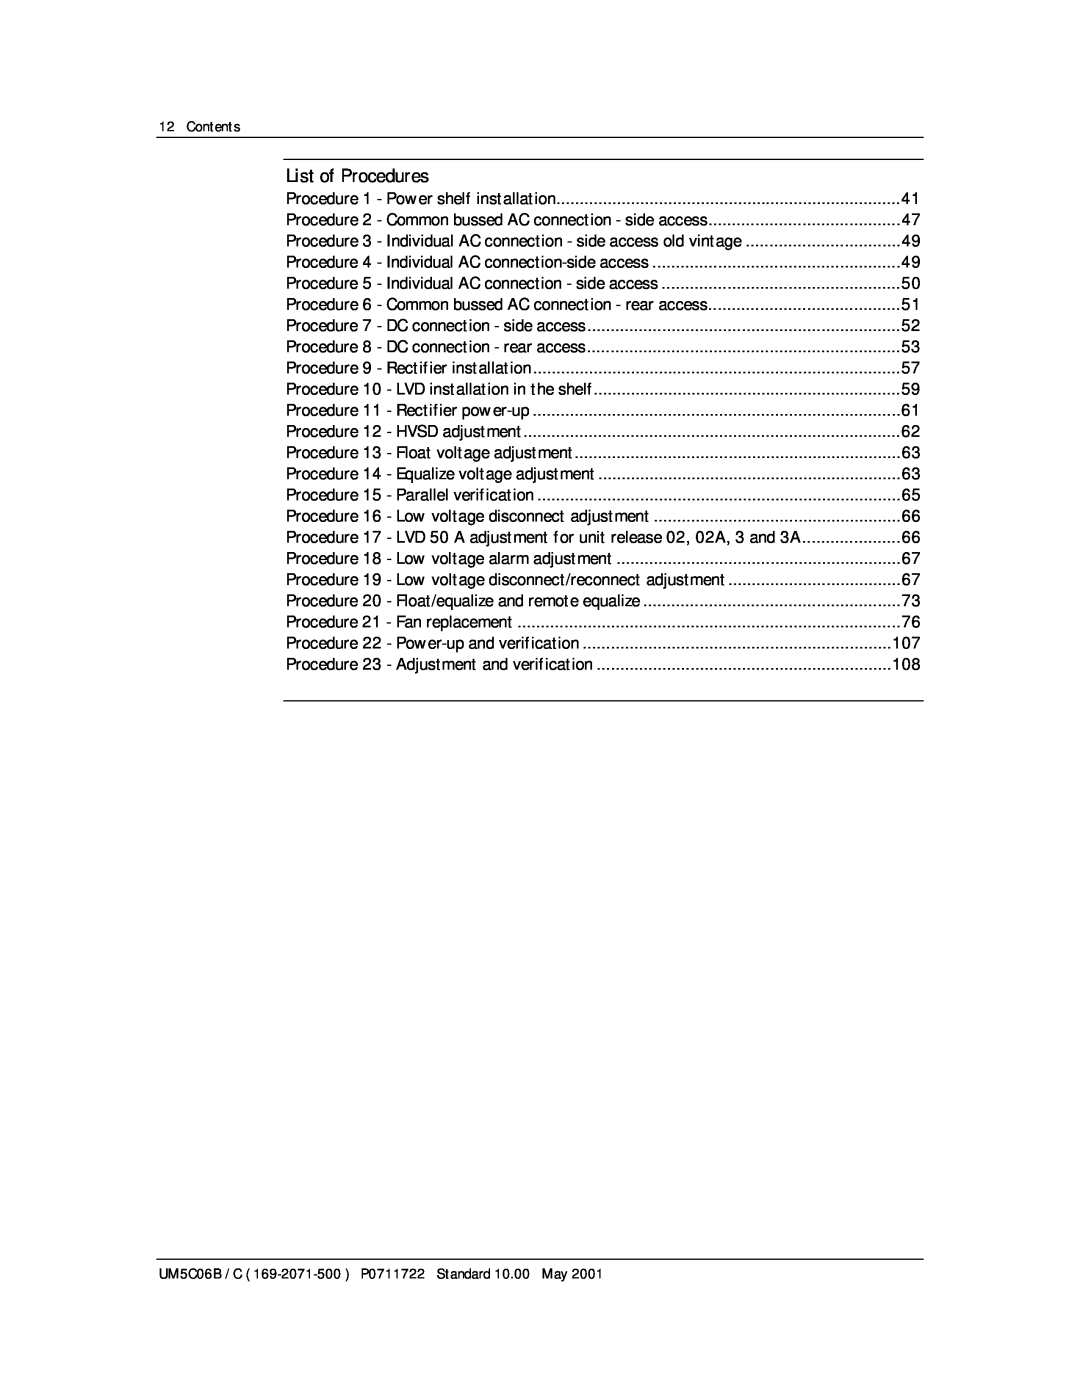 Emerson MPR15 Series, MPR25 user manual List of Procedures, Contents, UM5C06B / C 169-2071-500 P0711722 Standard 10.00 May 